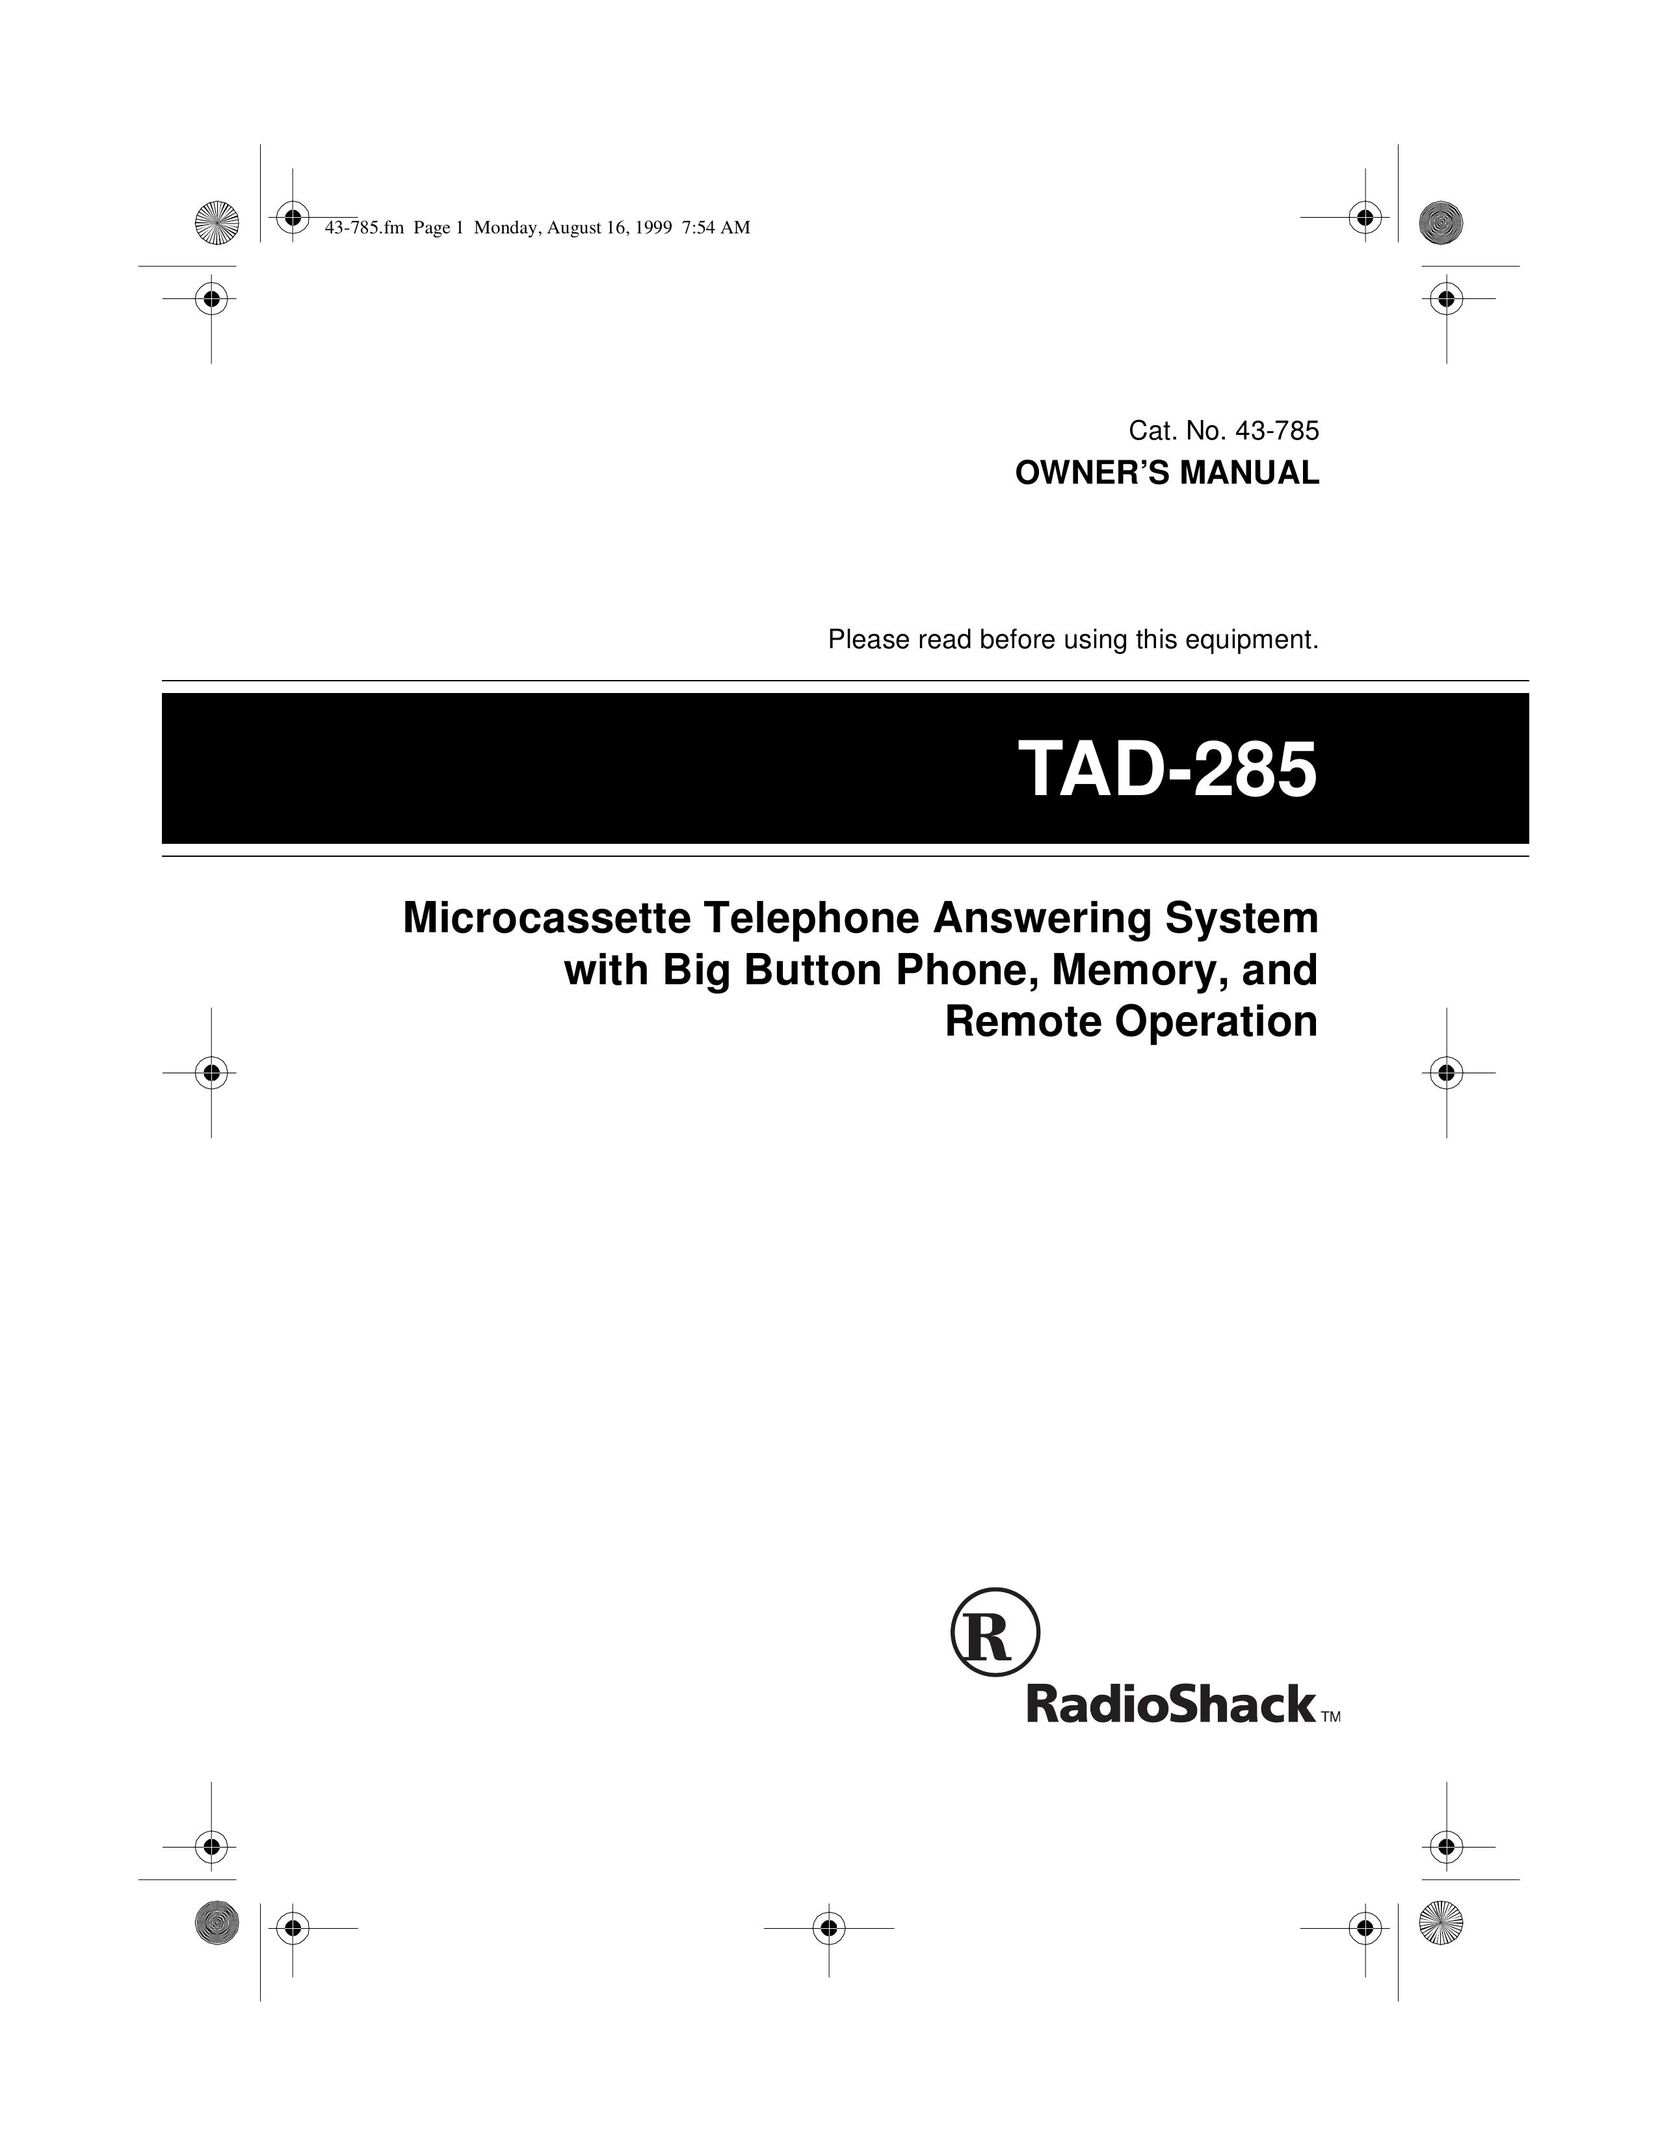 Radio Shack TAD-285 Answering Machine User Manual